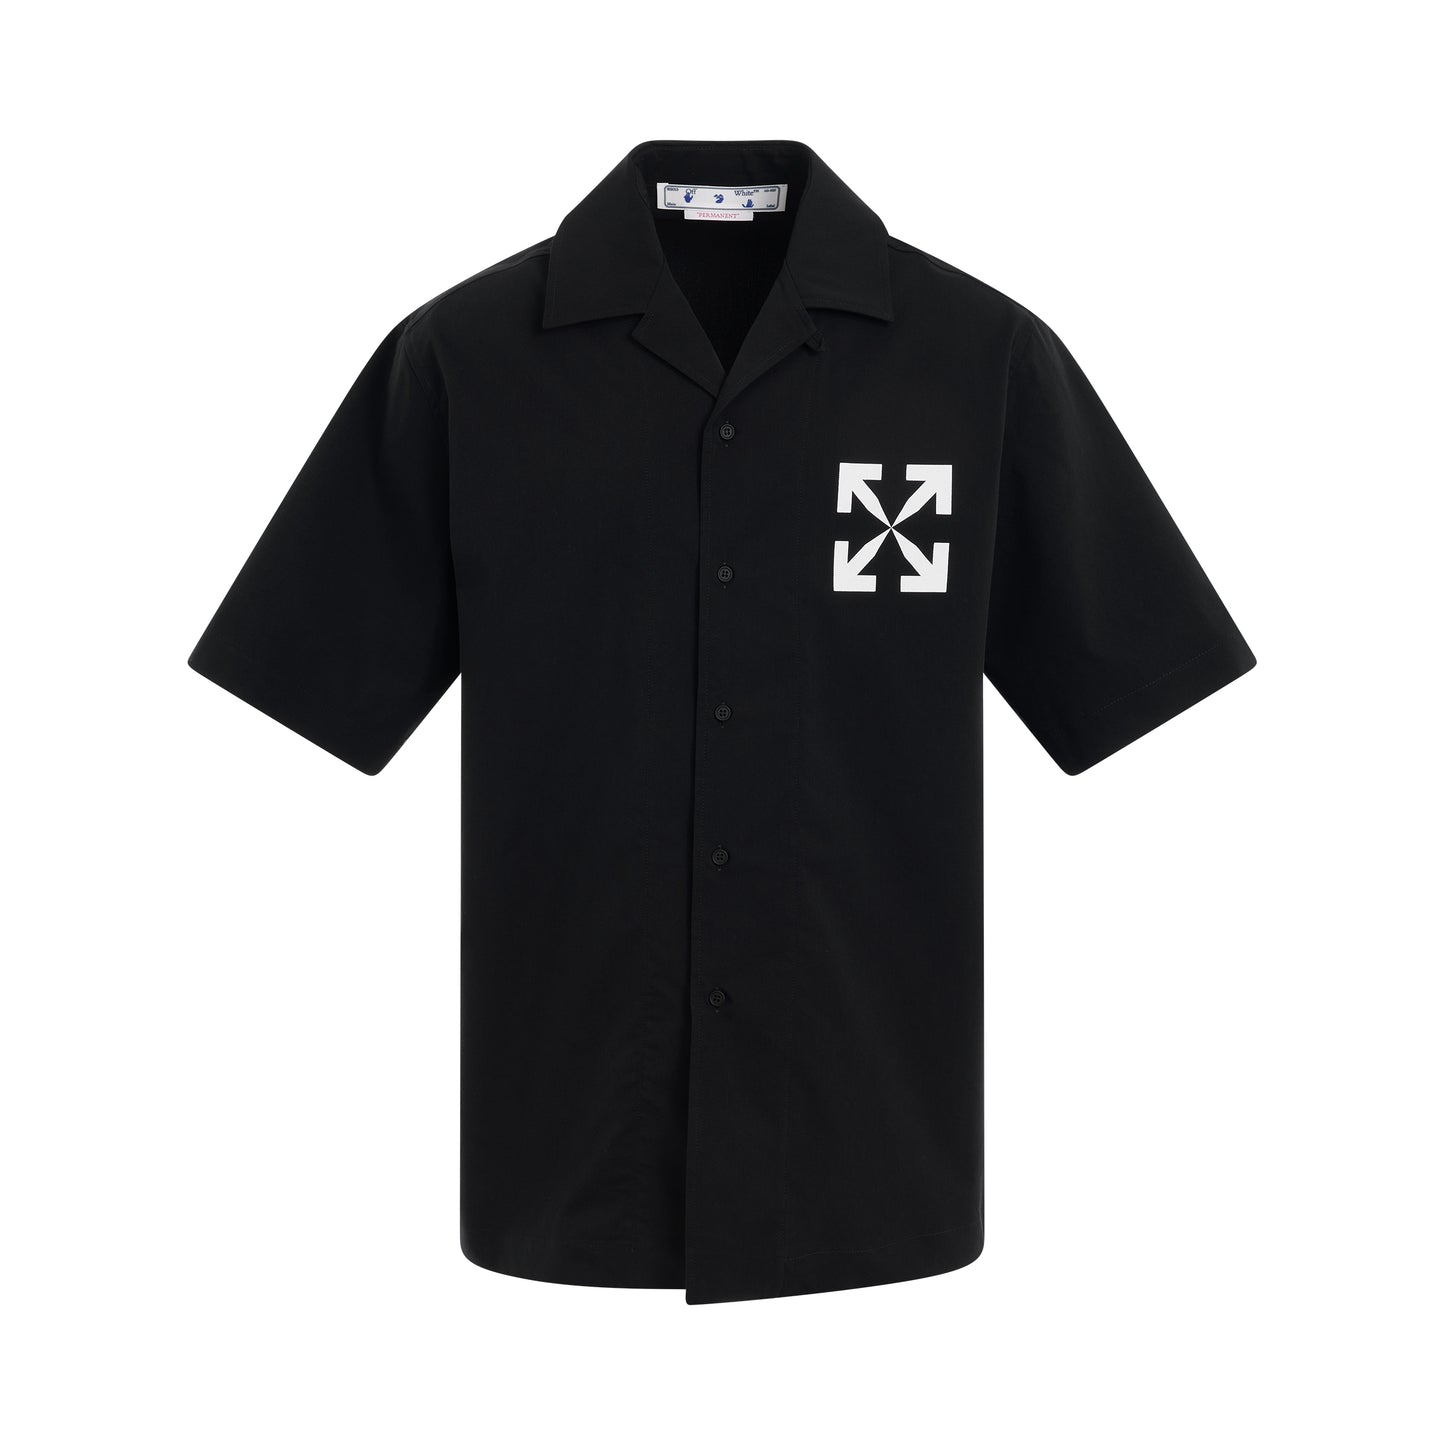 Single Arrow Holiday Shirt in Black/White